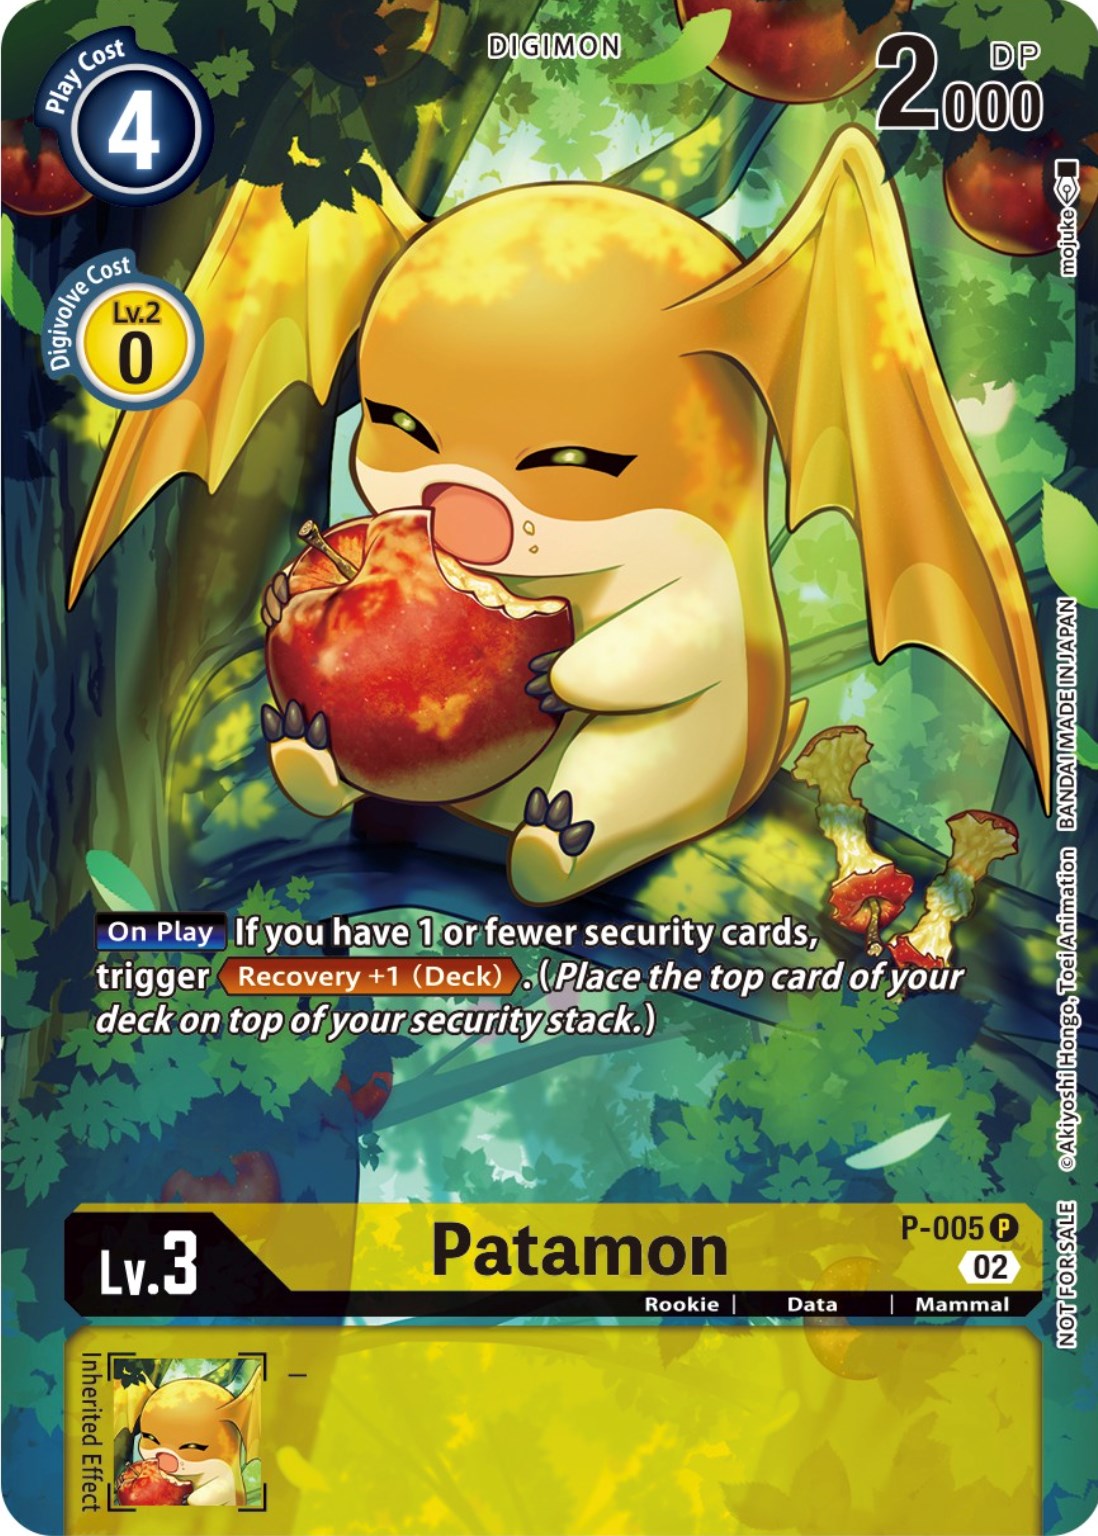 Patamon [P-005] (Digimon Illustration Competition Promotion Pack) [Promotional Cards] | Devastation Store